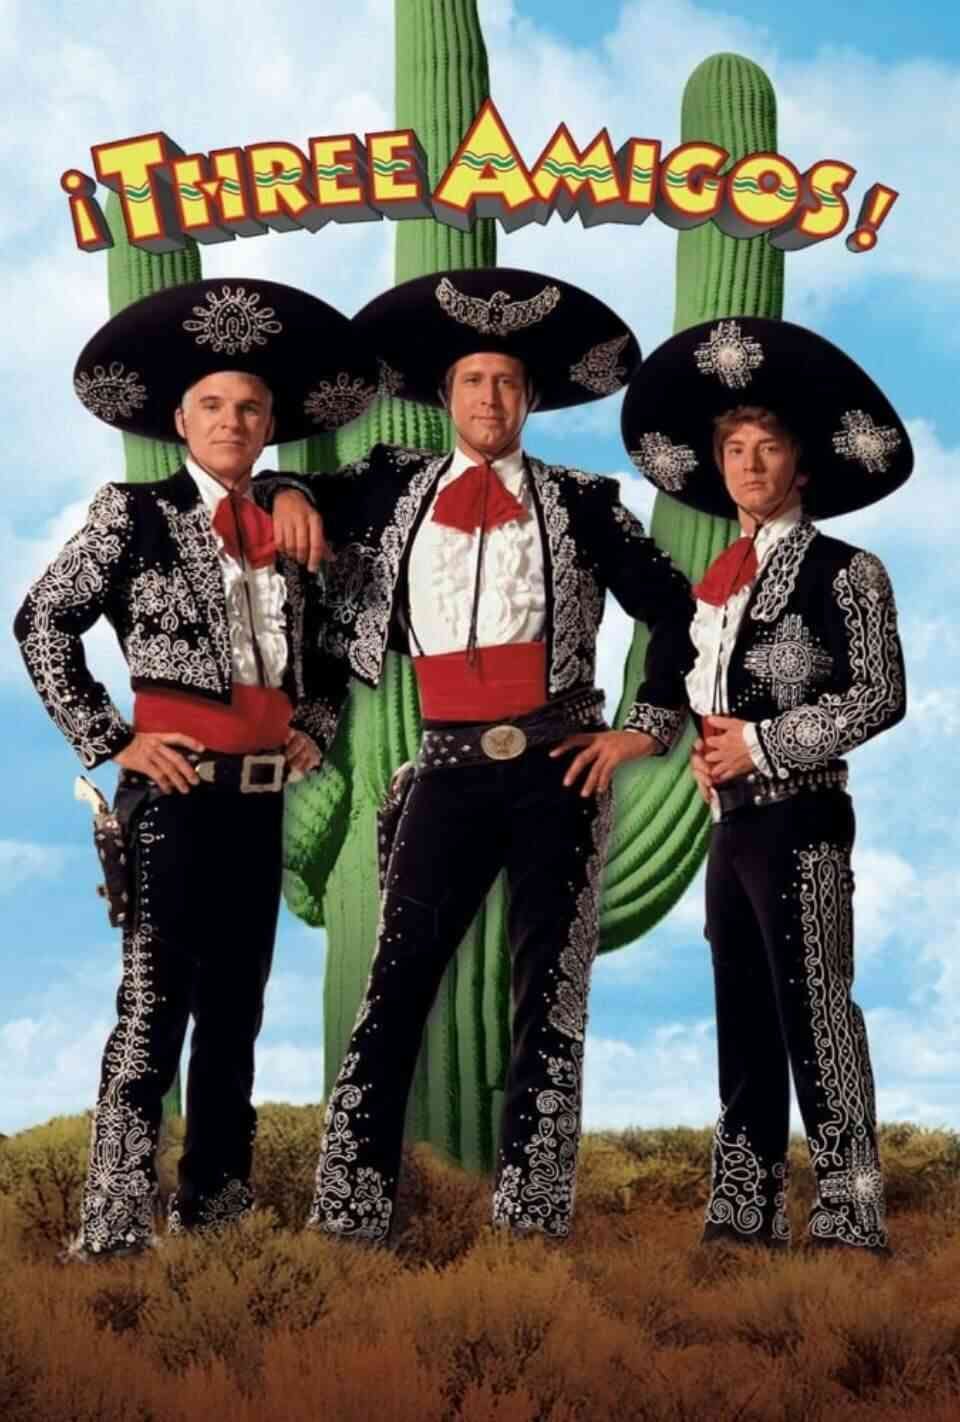 Read ¡Three Amigos! screenplay (poster)